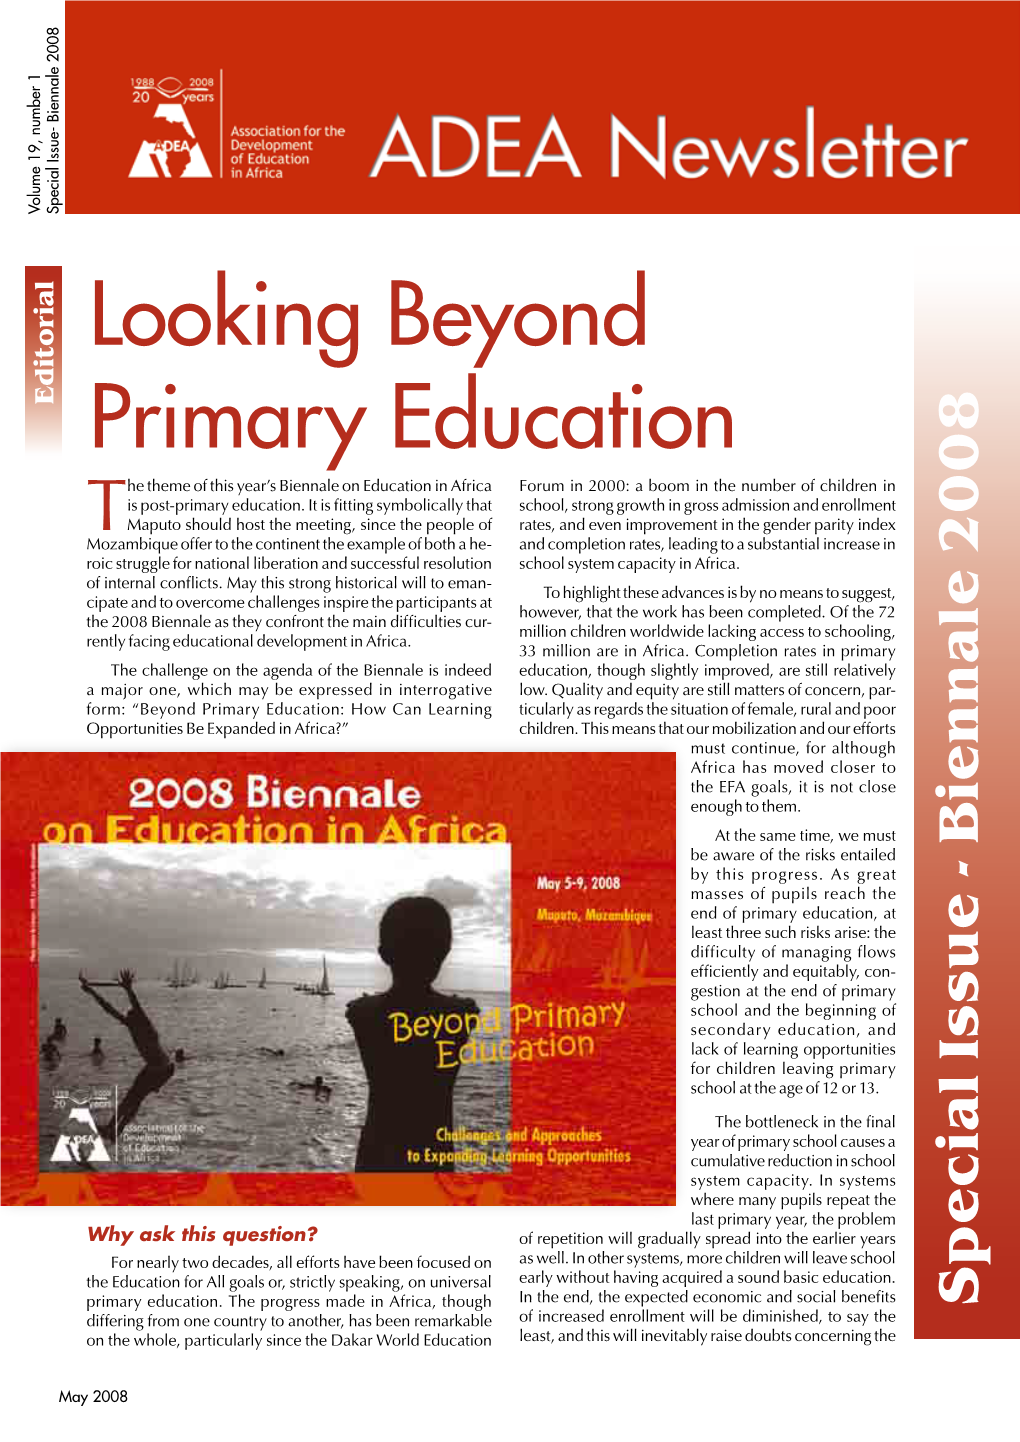 Looking Beyond Primary Education